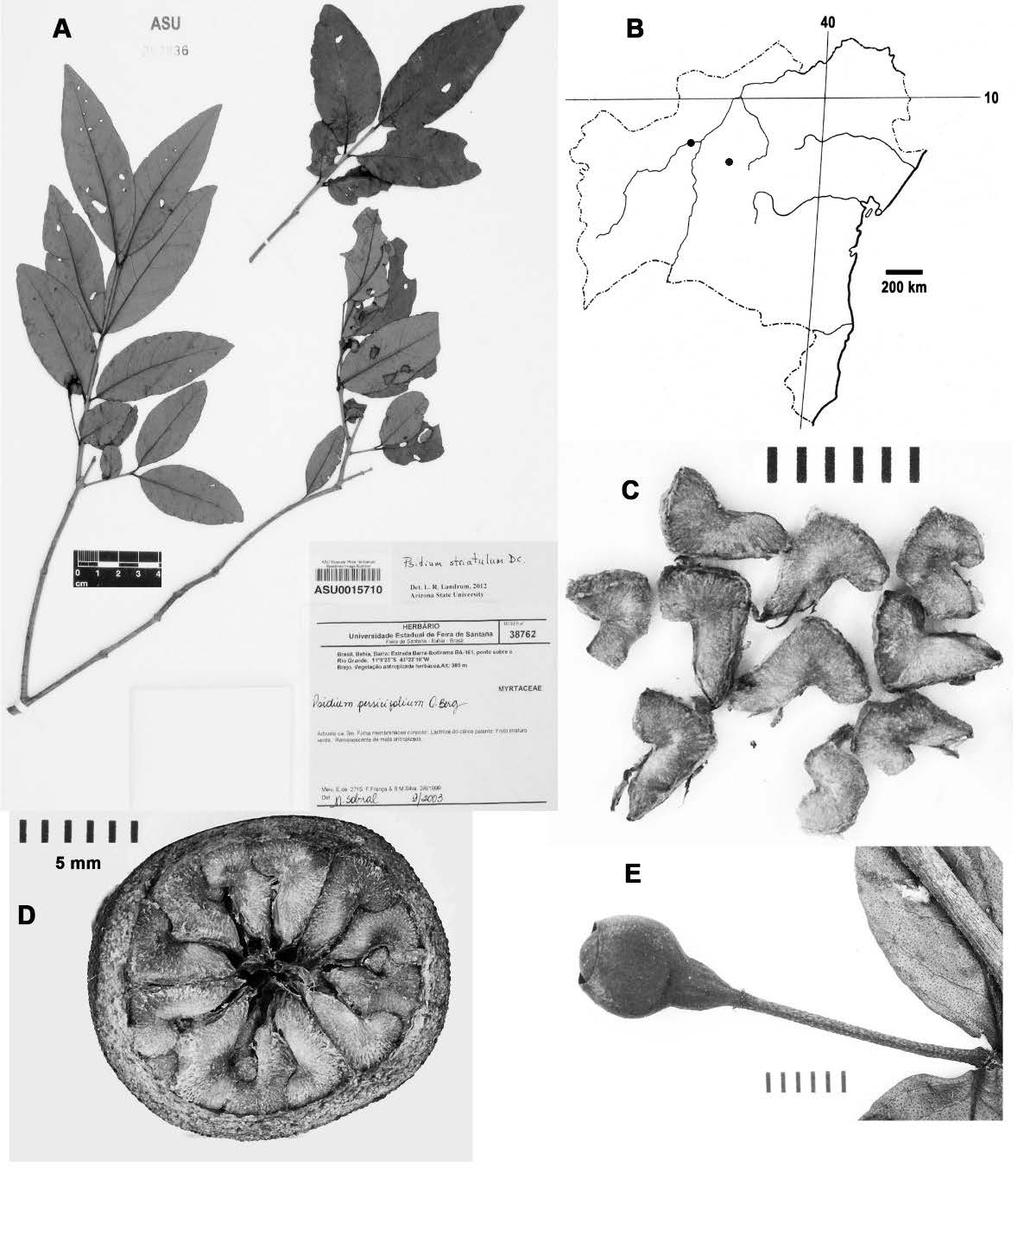 2017 PSIDIUM IN BAHIA, BRAZIL 93 Fig. 29. Psidium striatulum. A. Sheet of P. striatulum from Bahia, Mun. Barra. B. Map of distribution. C. Seeds with typical angular shape. D.